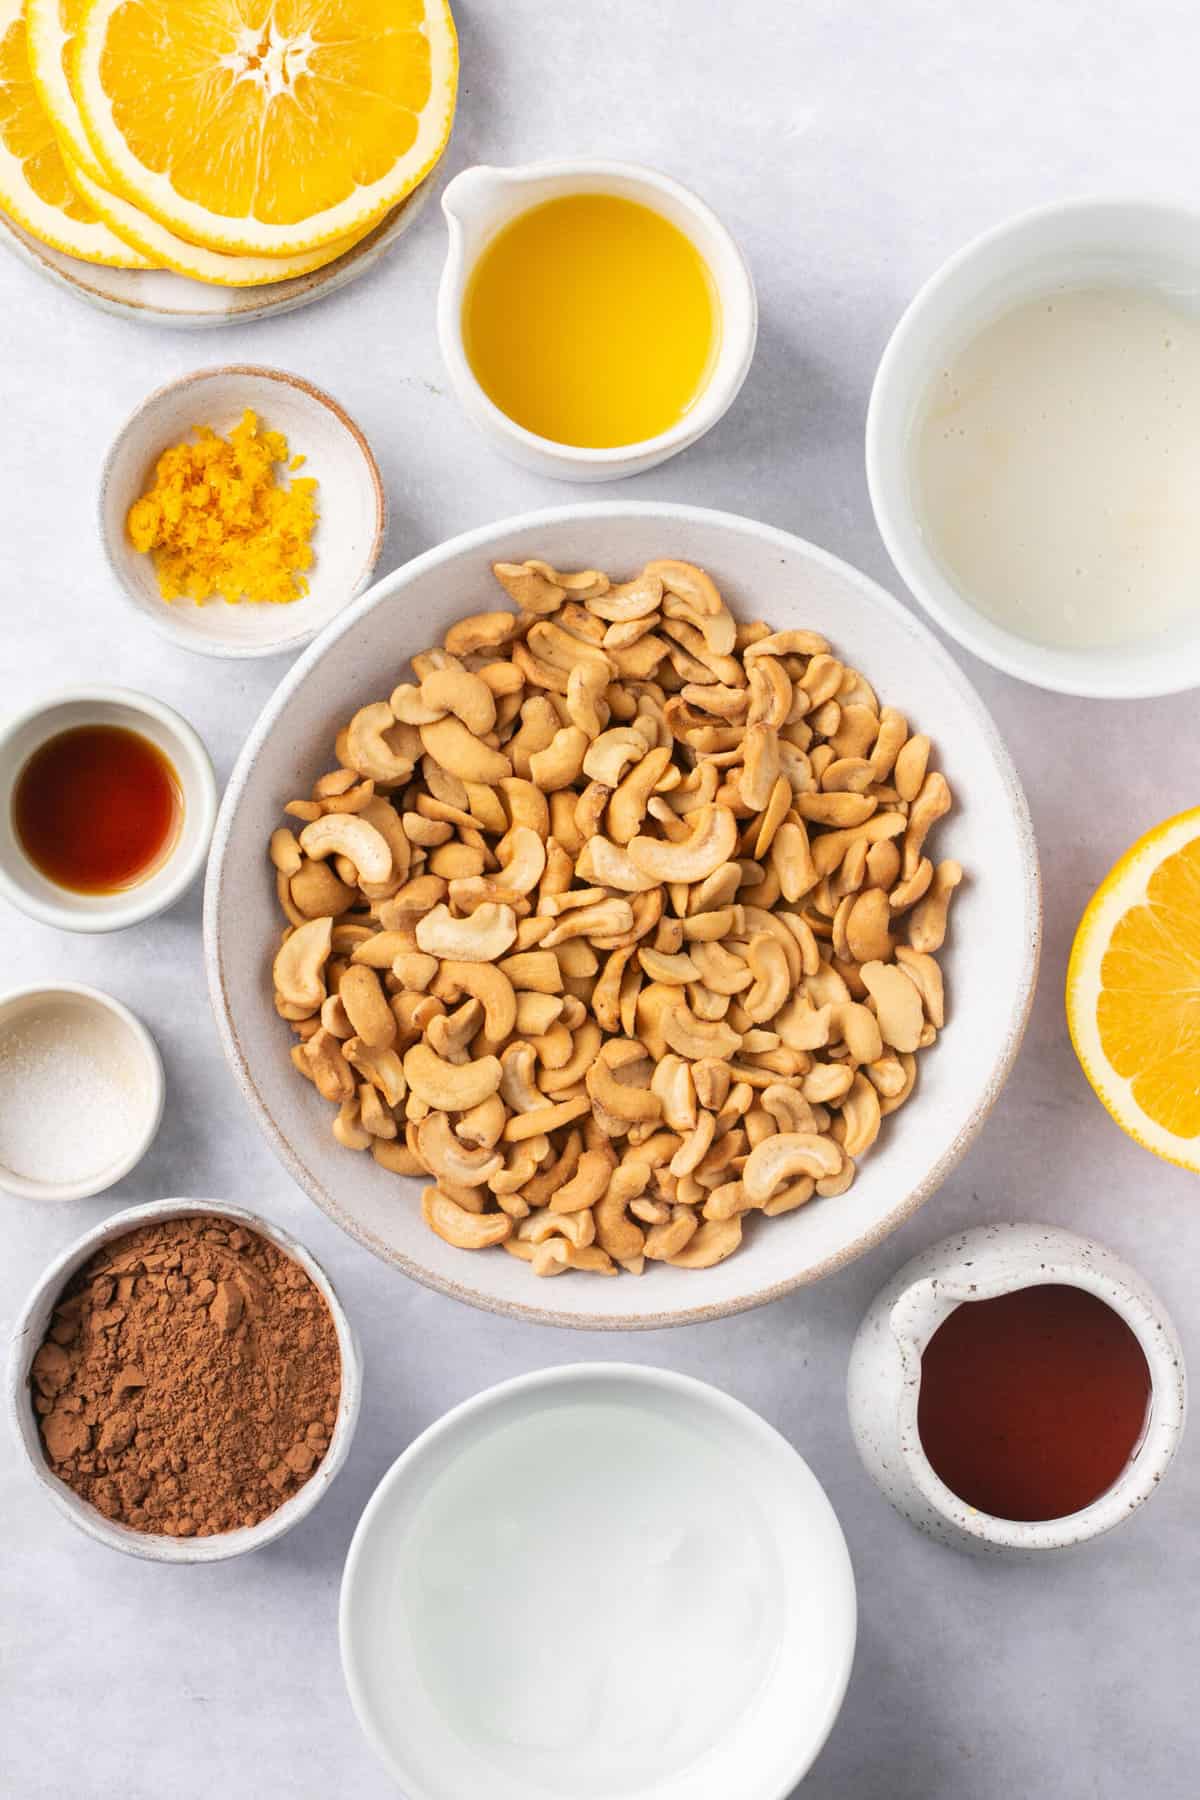 The ingredients needed to make vegan orange chocolate fudge, separated into bowls. 